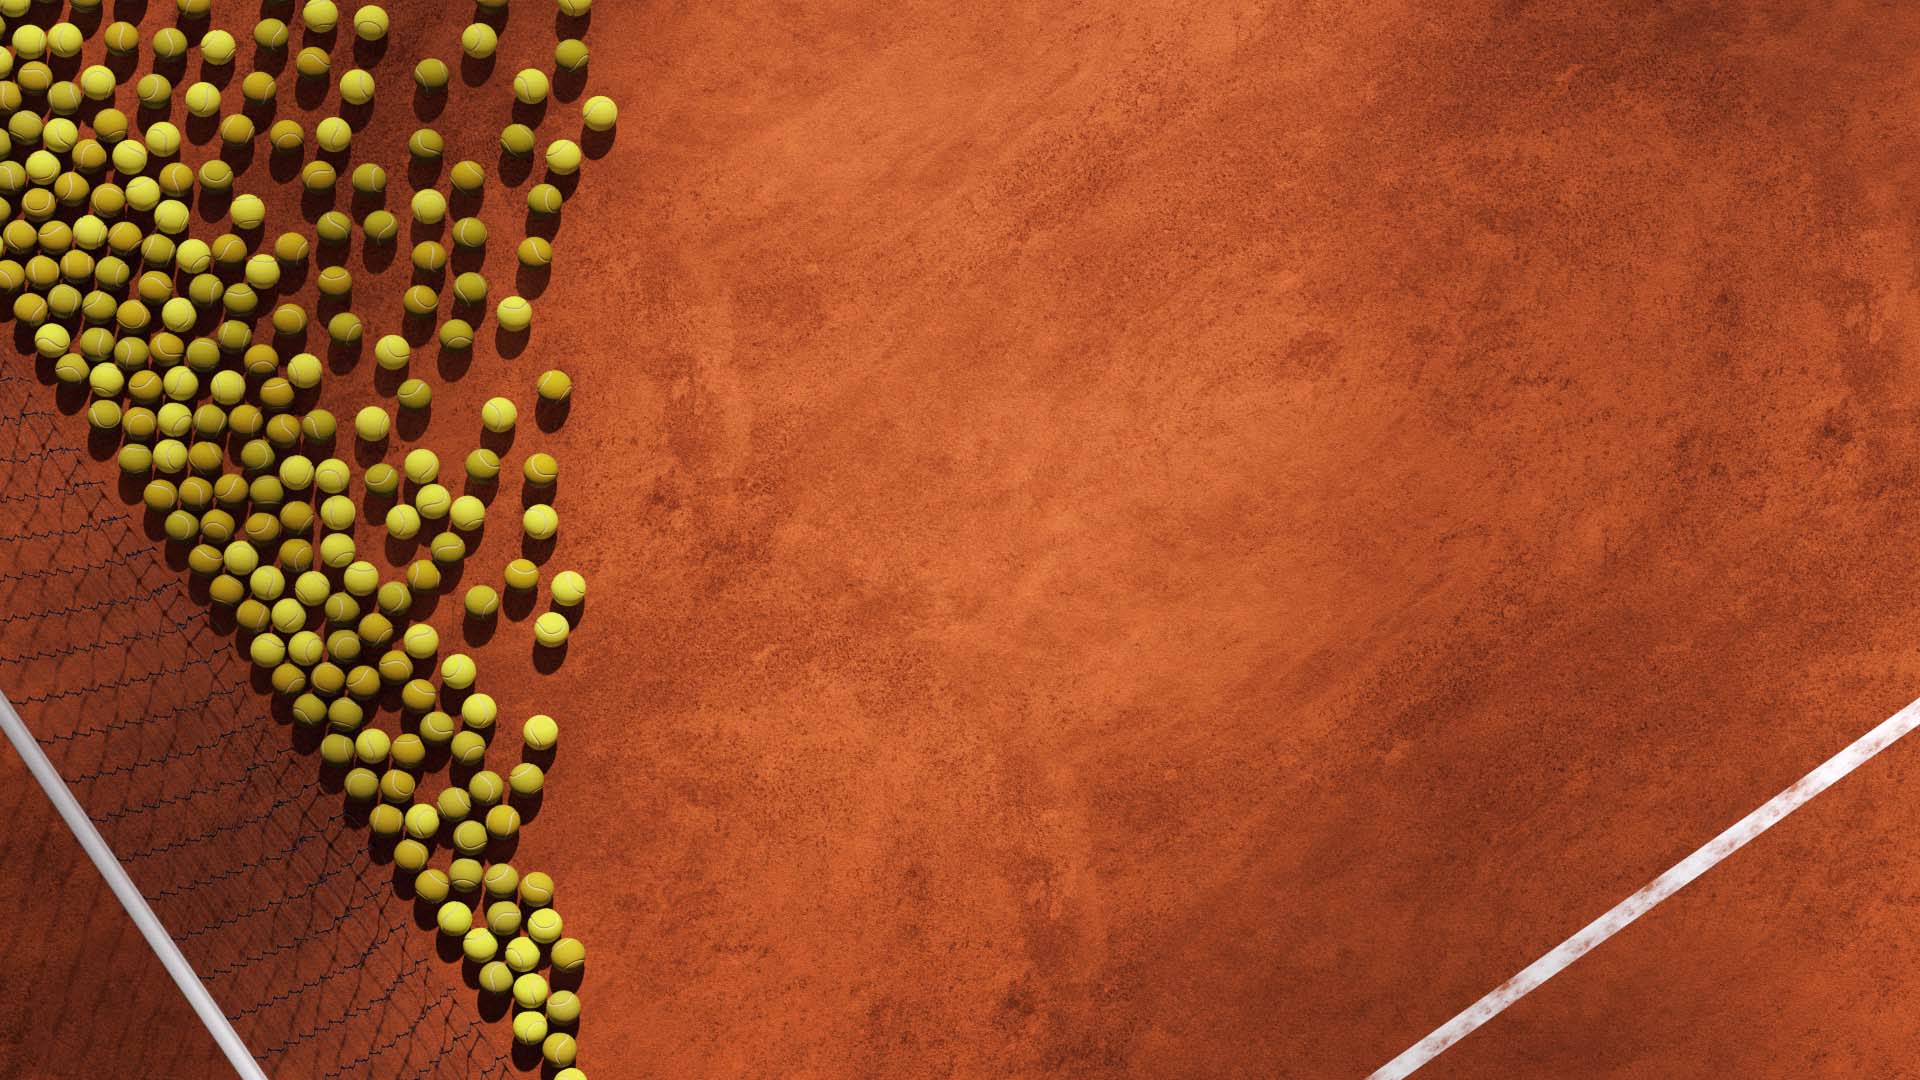 design-motion-3d-photography-octane-redshift-art-visual-animation-render-style-graphic-olympia-sport-olimpic-athlete-tennis-balls-field-orange-dust